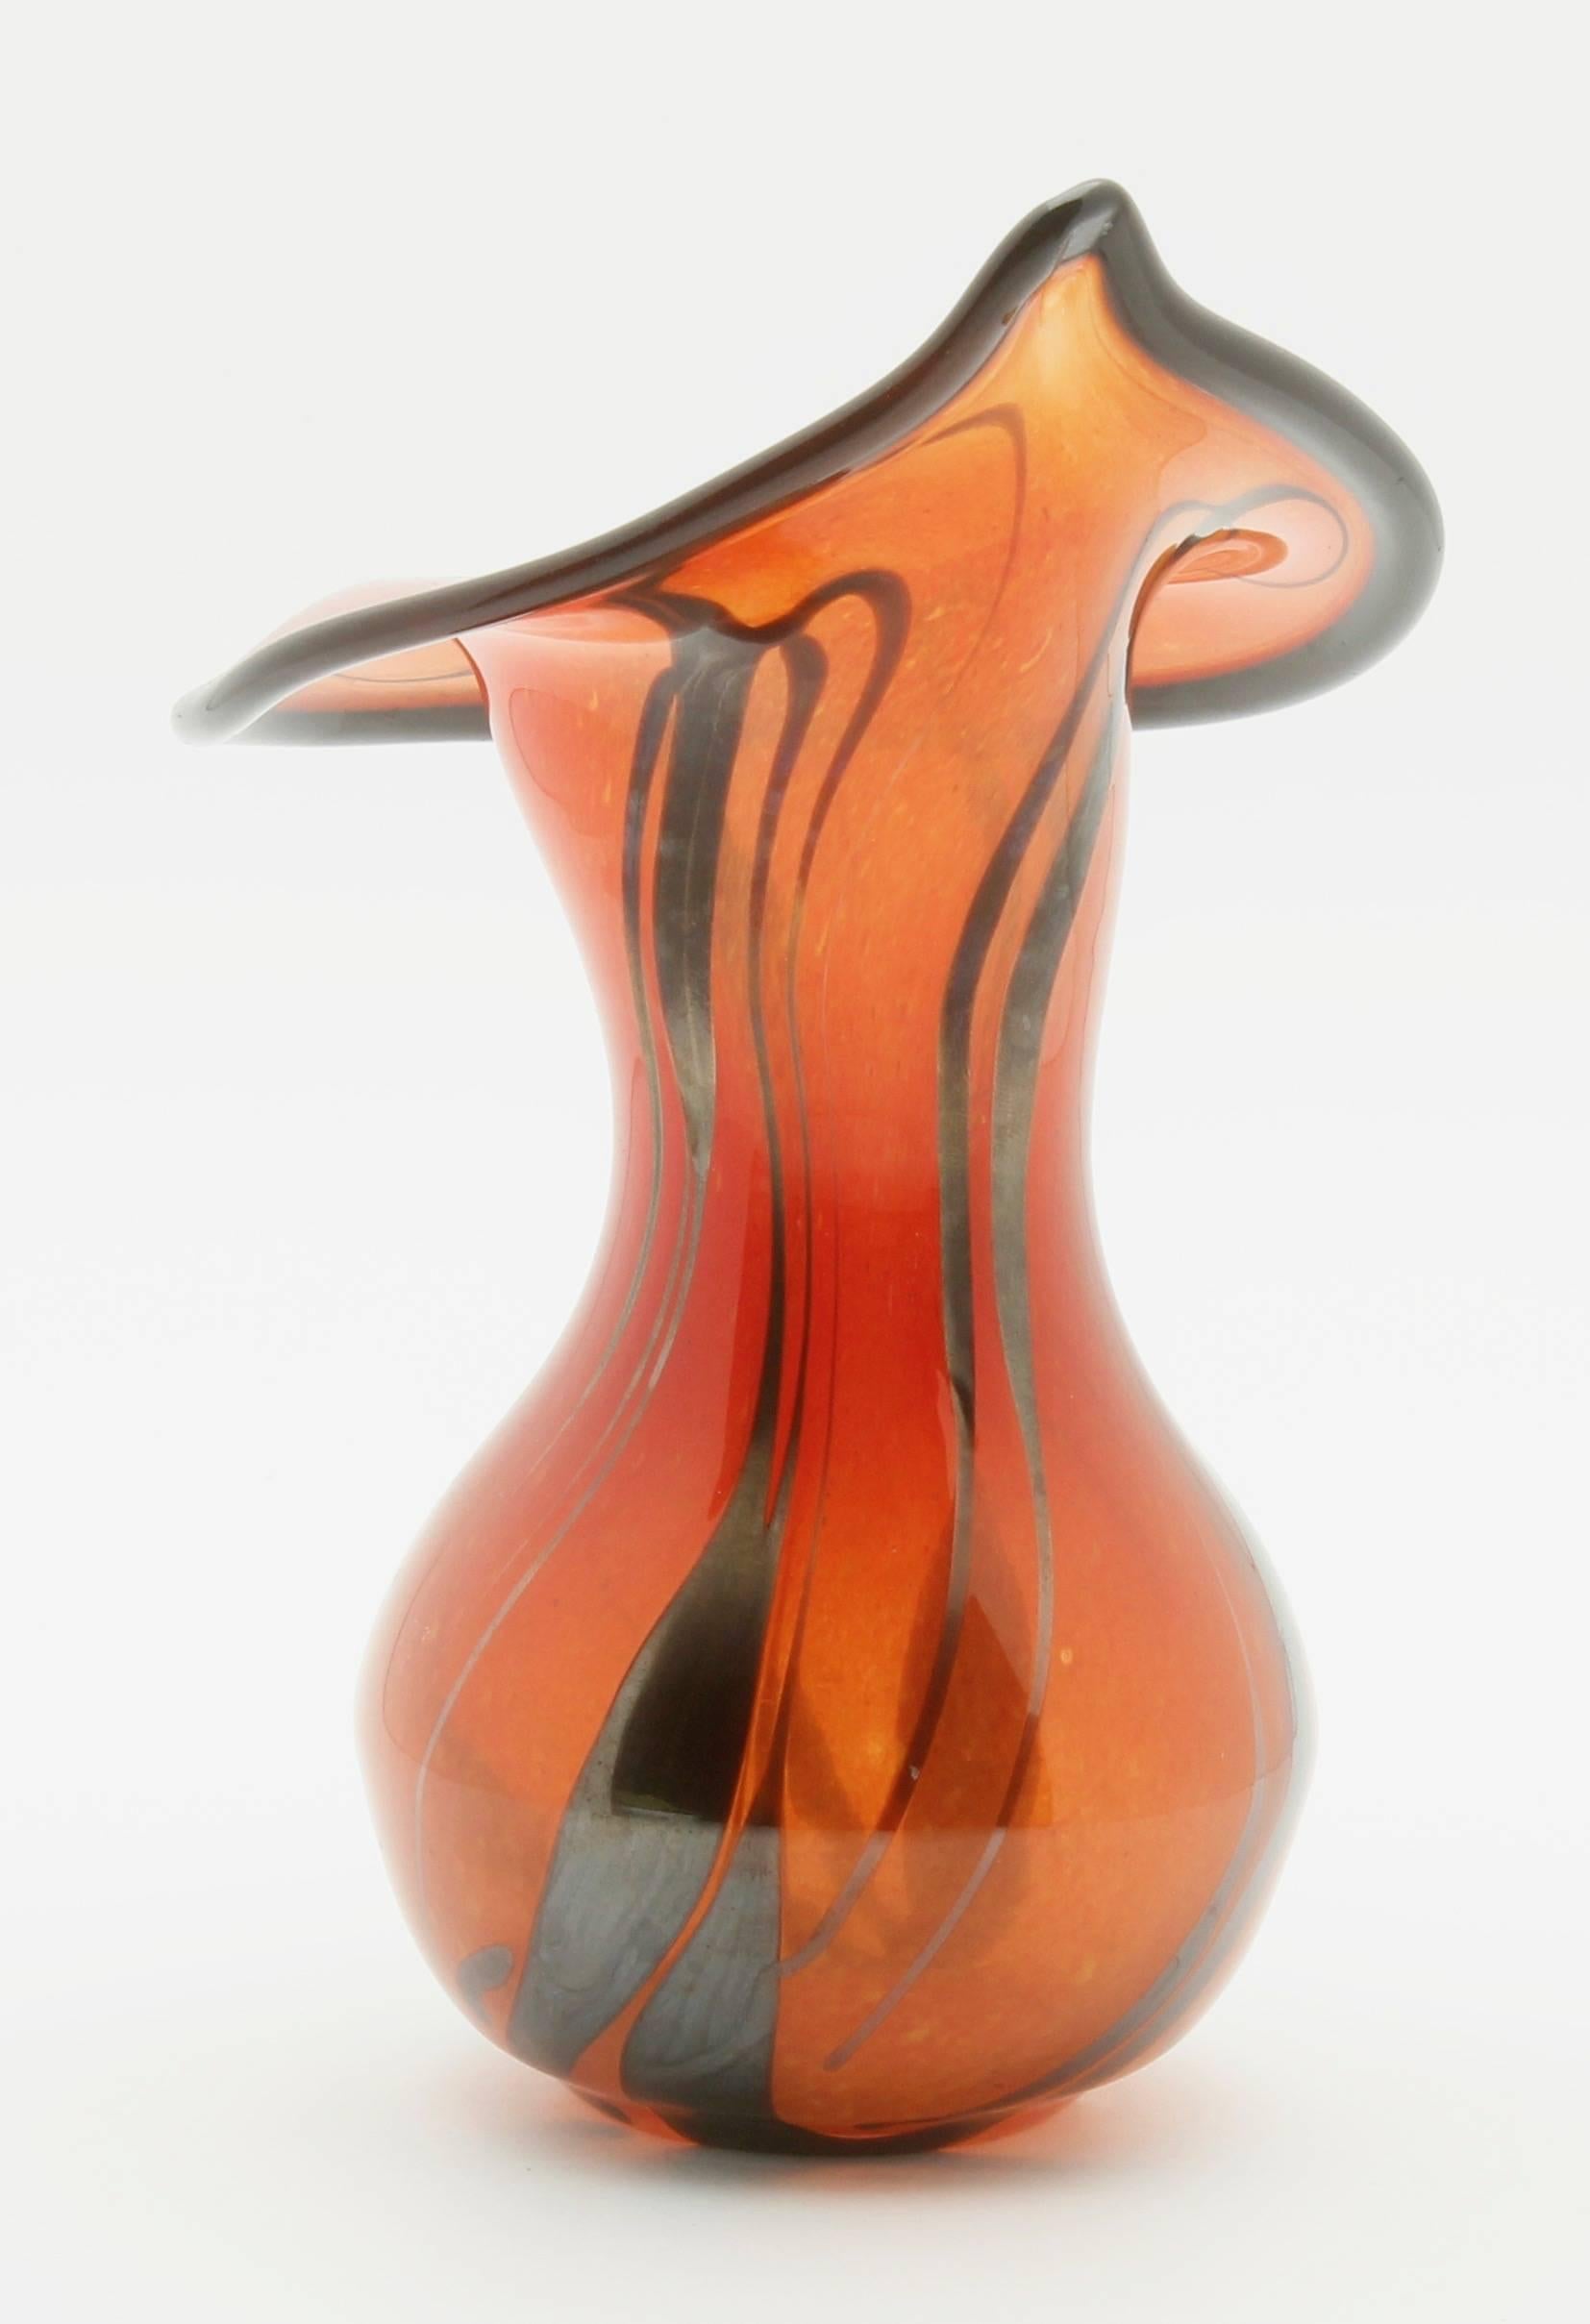 Fabulous Murano art glass cornucopia flower vase.
